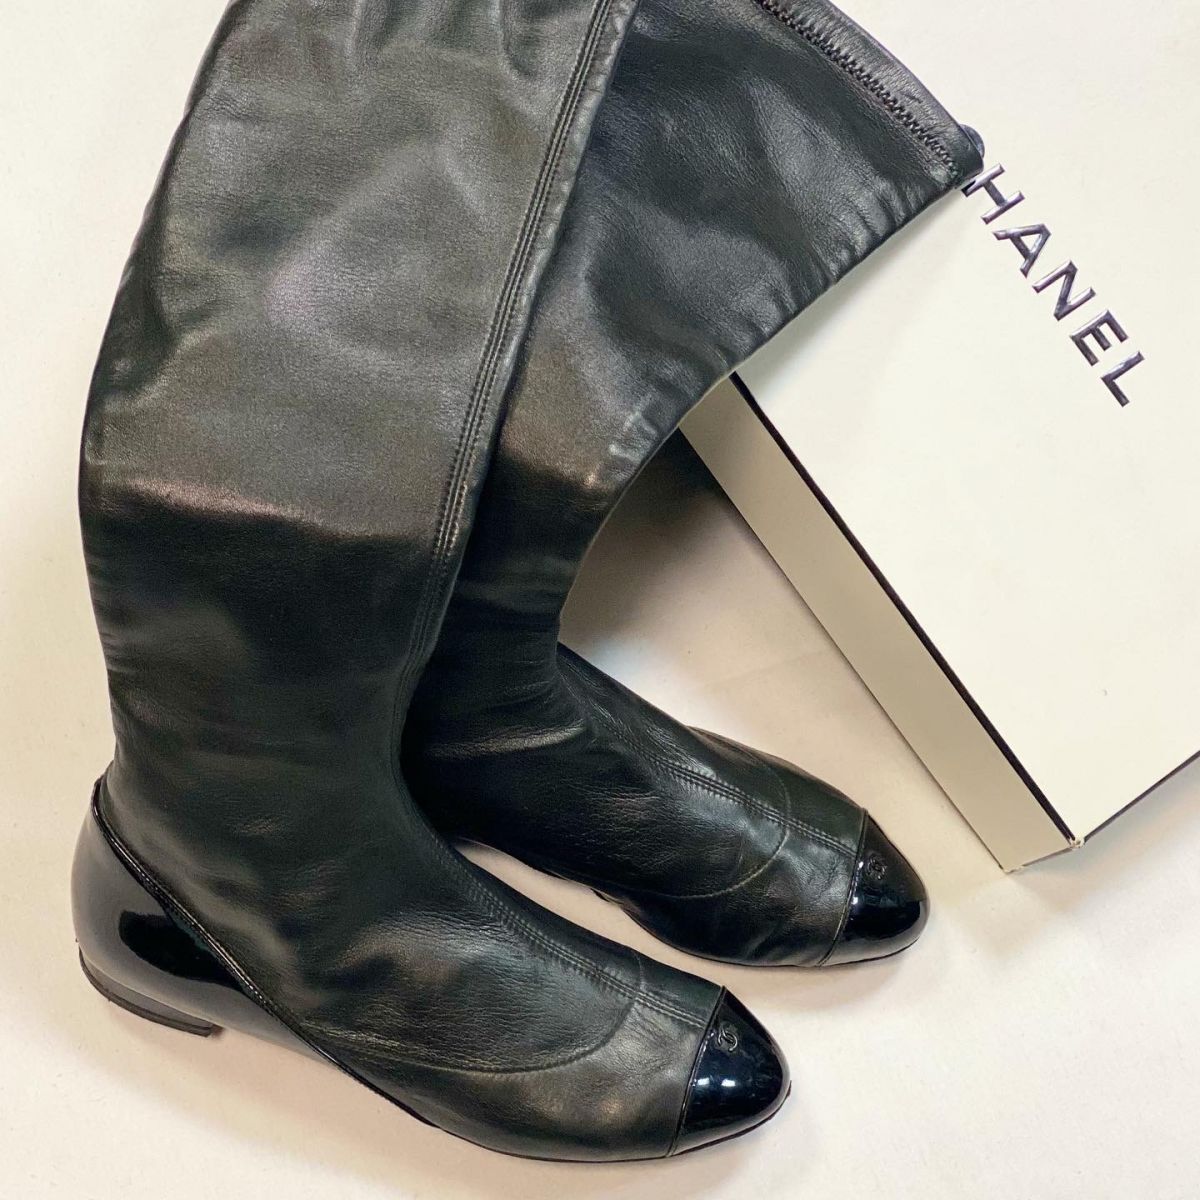 Сапоги Chanel размер 38.5 цена 23 078 руб 